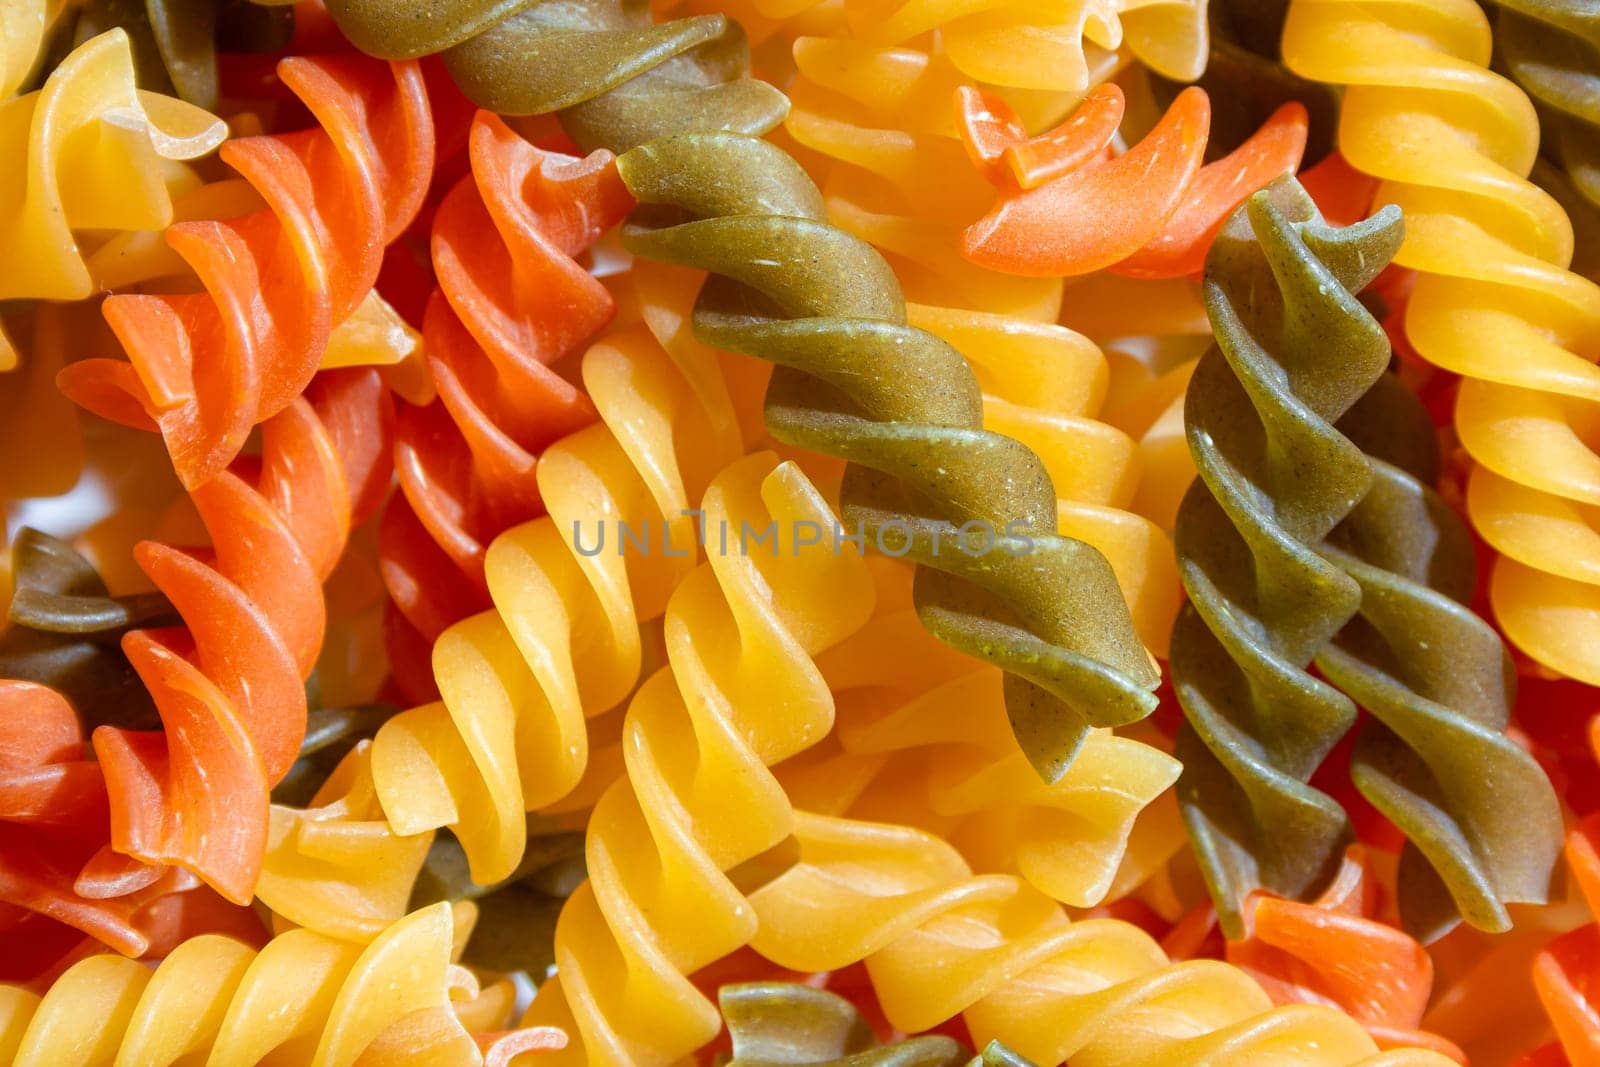 Uncooked Vibrant Colored Fusilli Pasta Background by InfinitumProdux